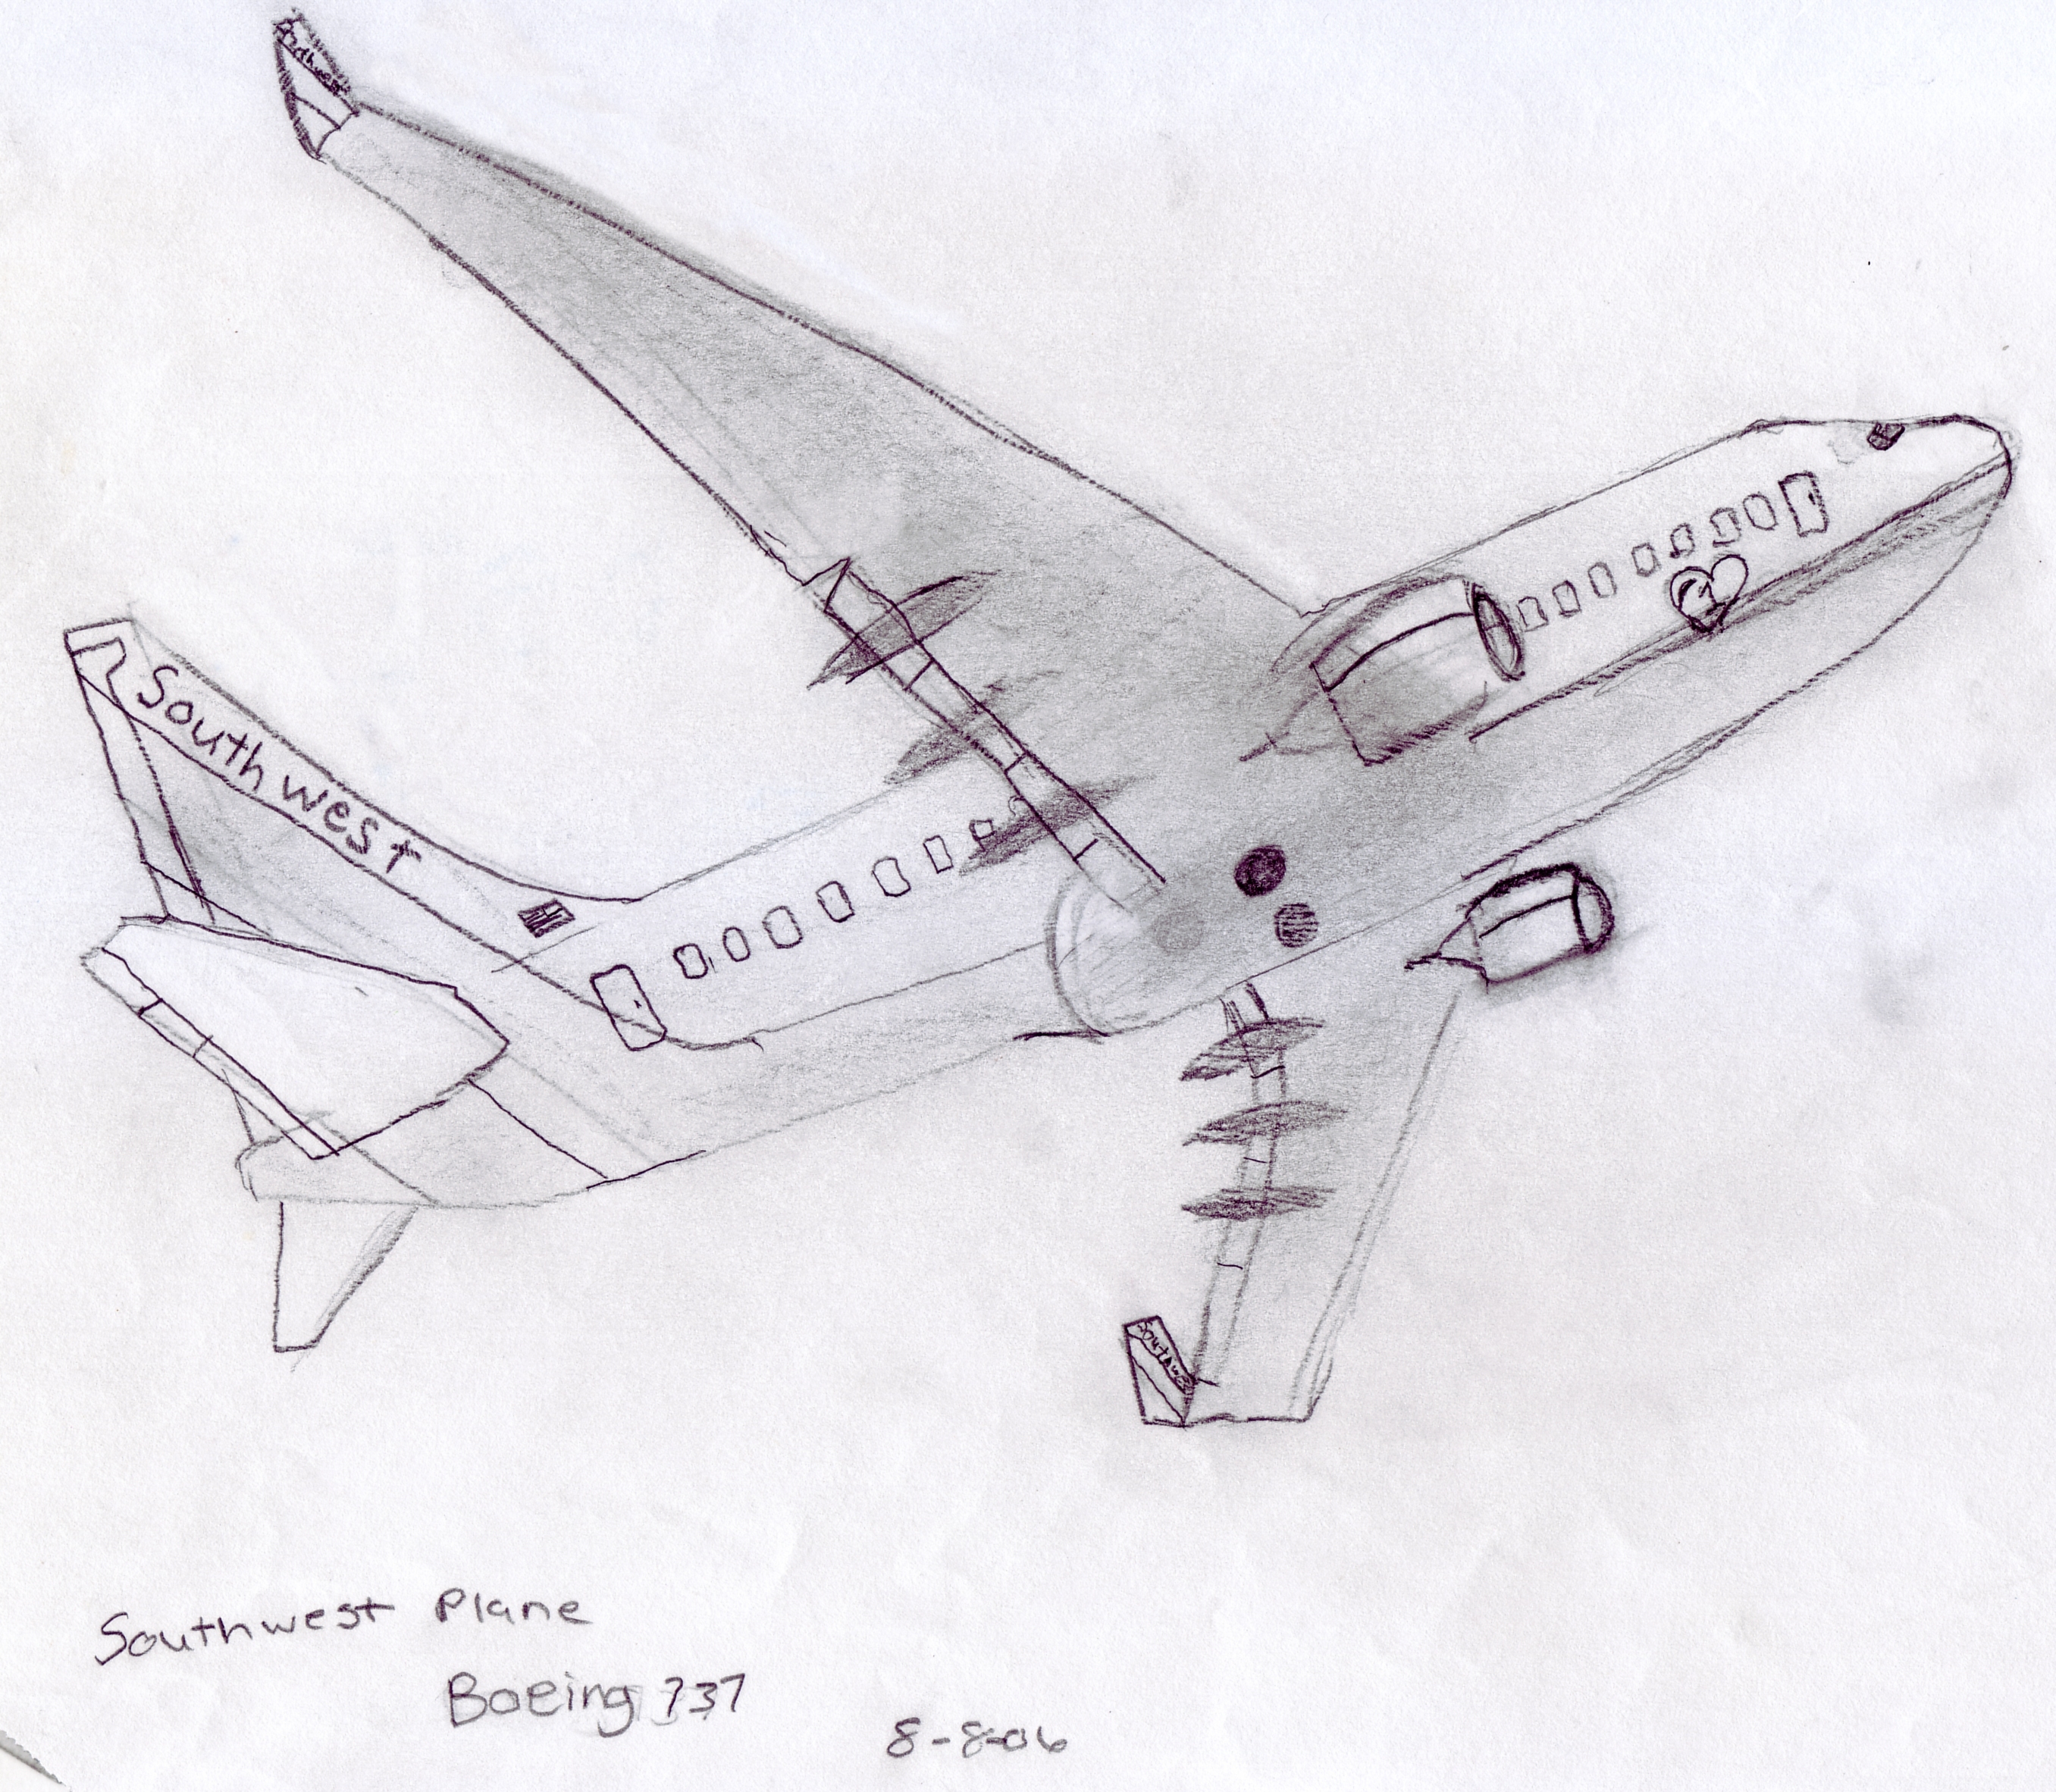 Southwest Airlines Boeing 737 by dar1989 on DeviantArt